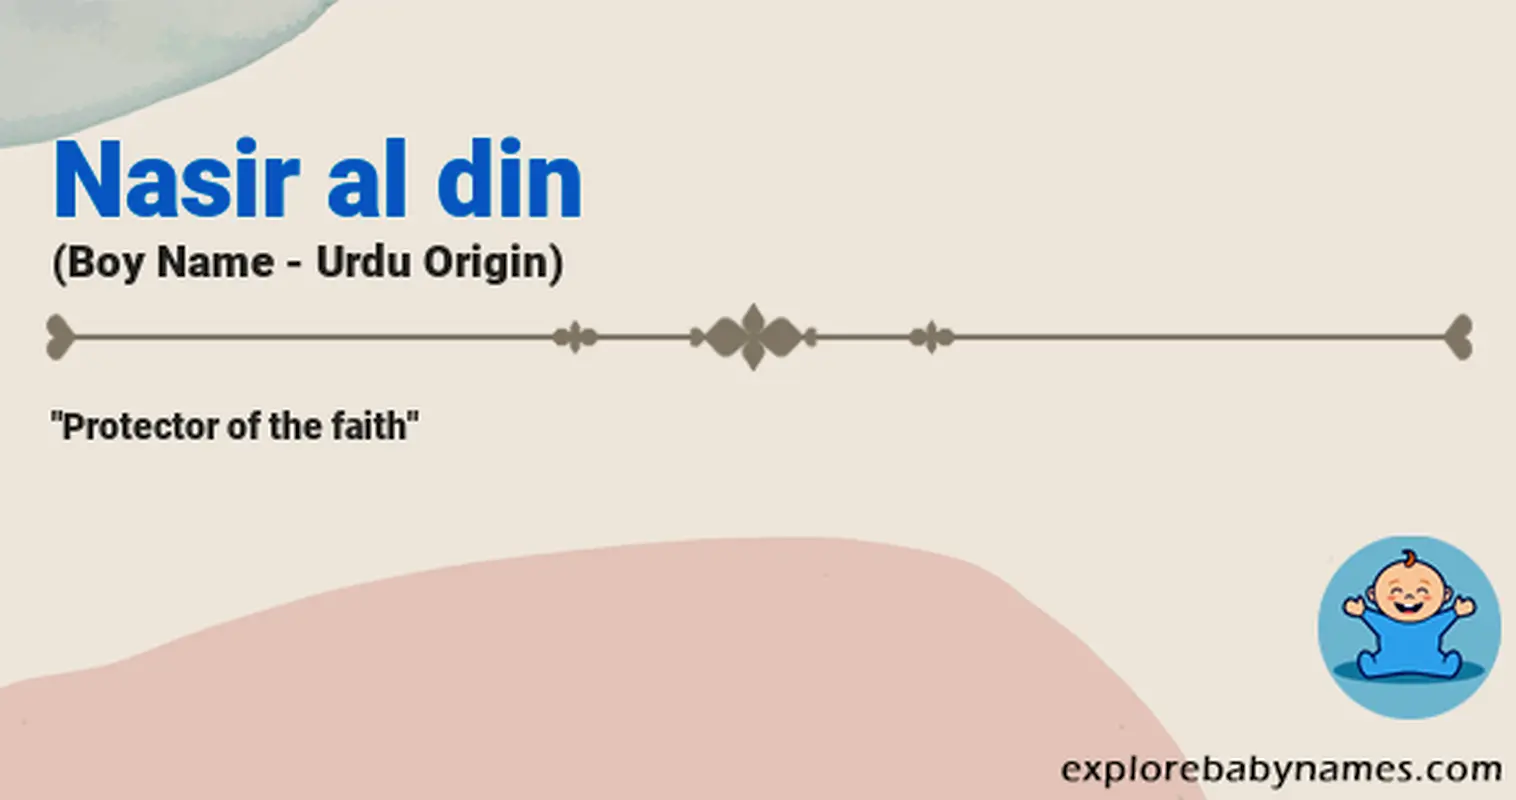 Meaning of Nasir al din